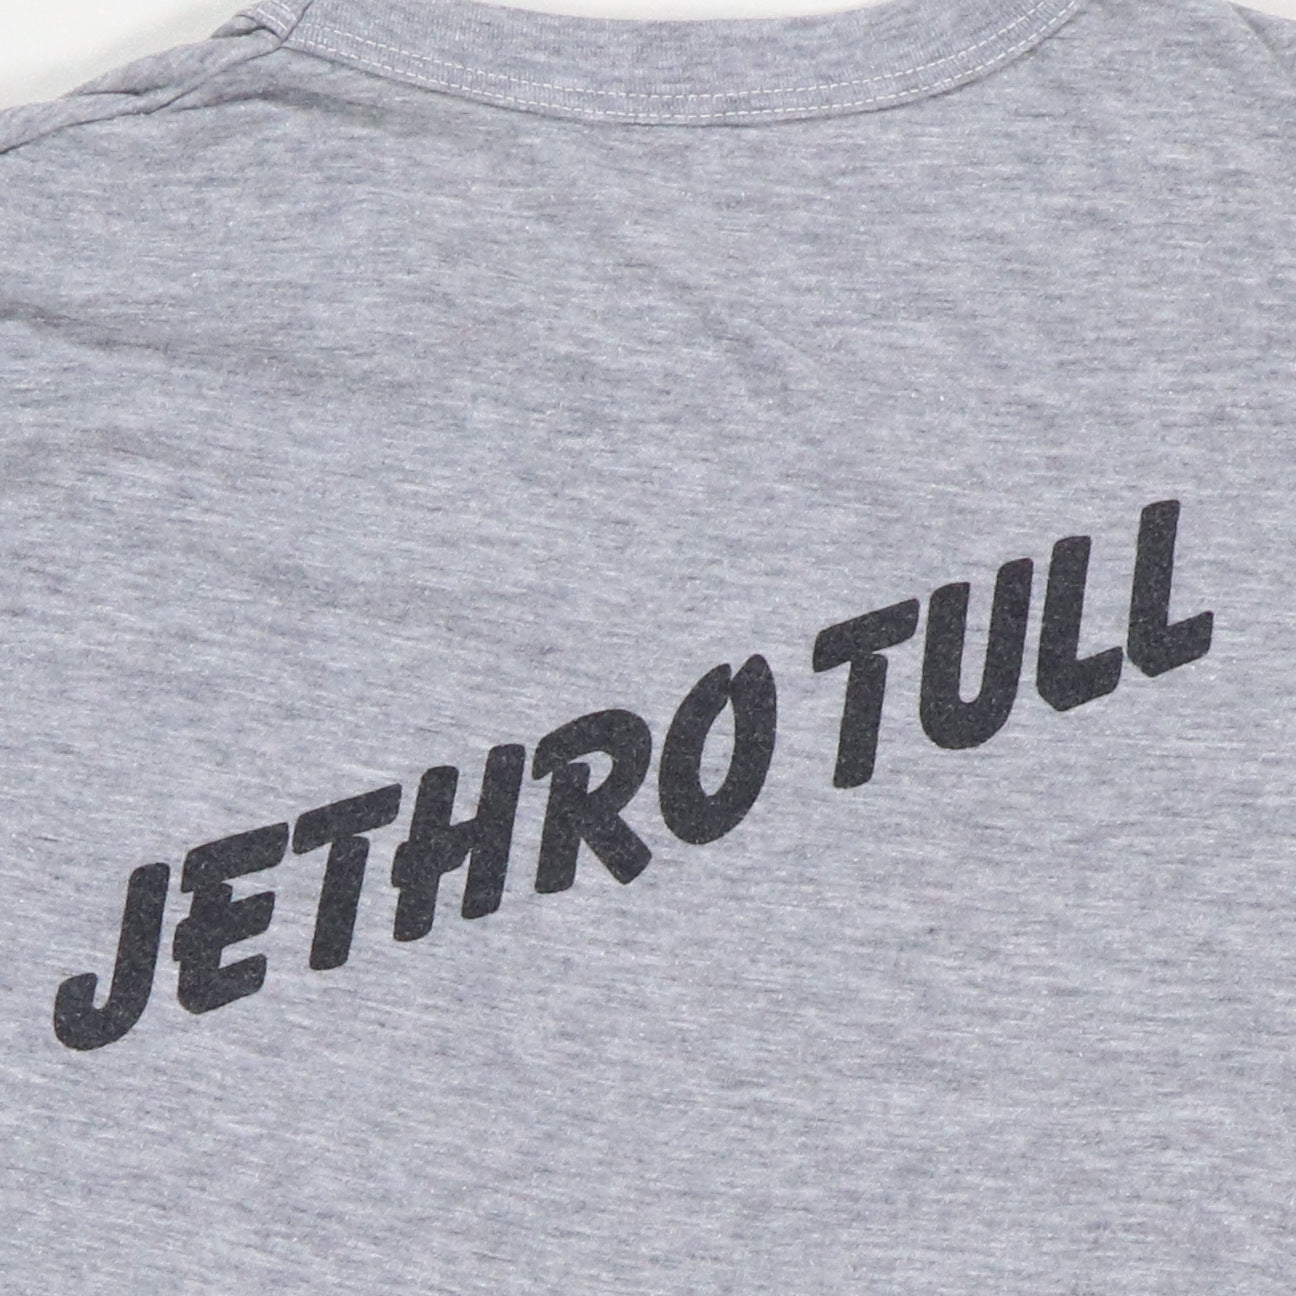 1984 Jethro Tull Shirt